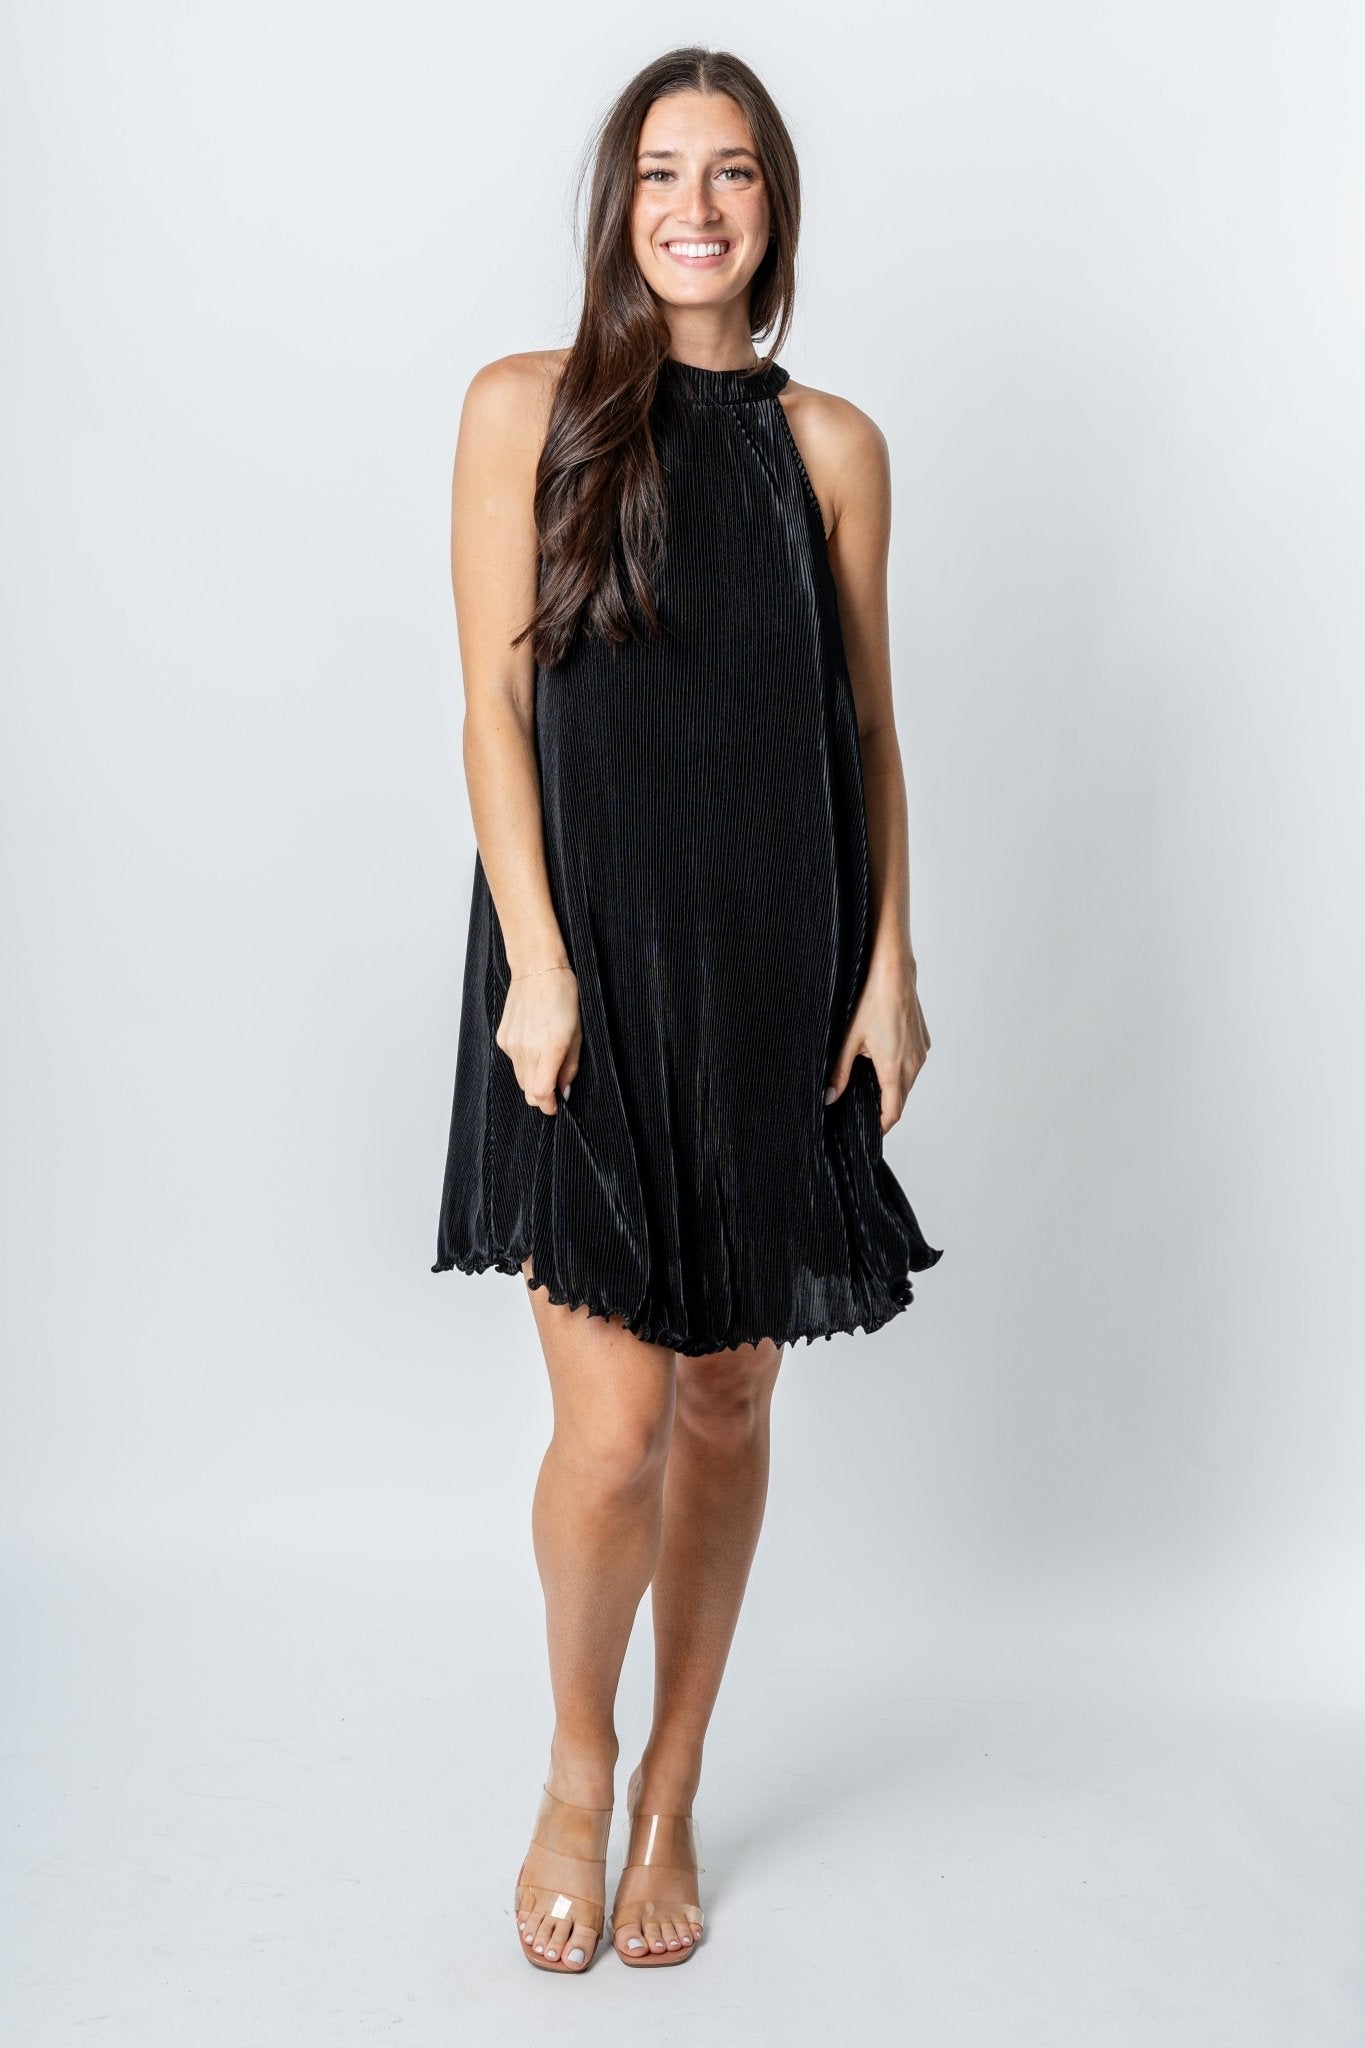 Pleated mini dress black - Trendy Dress - Fashion Dresses at Lush Fashion Lounge Boutique in Oklahoma City